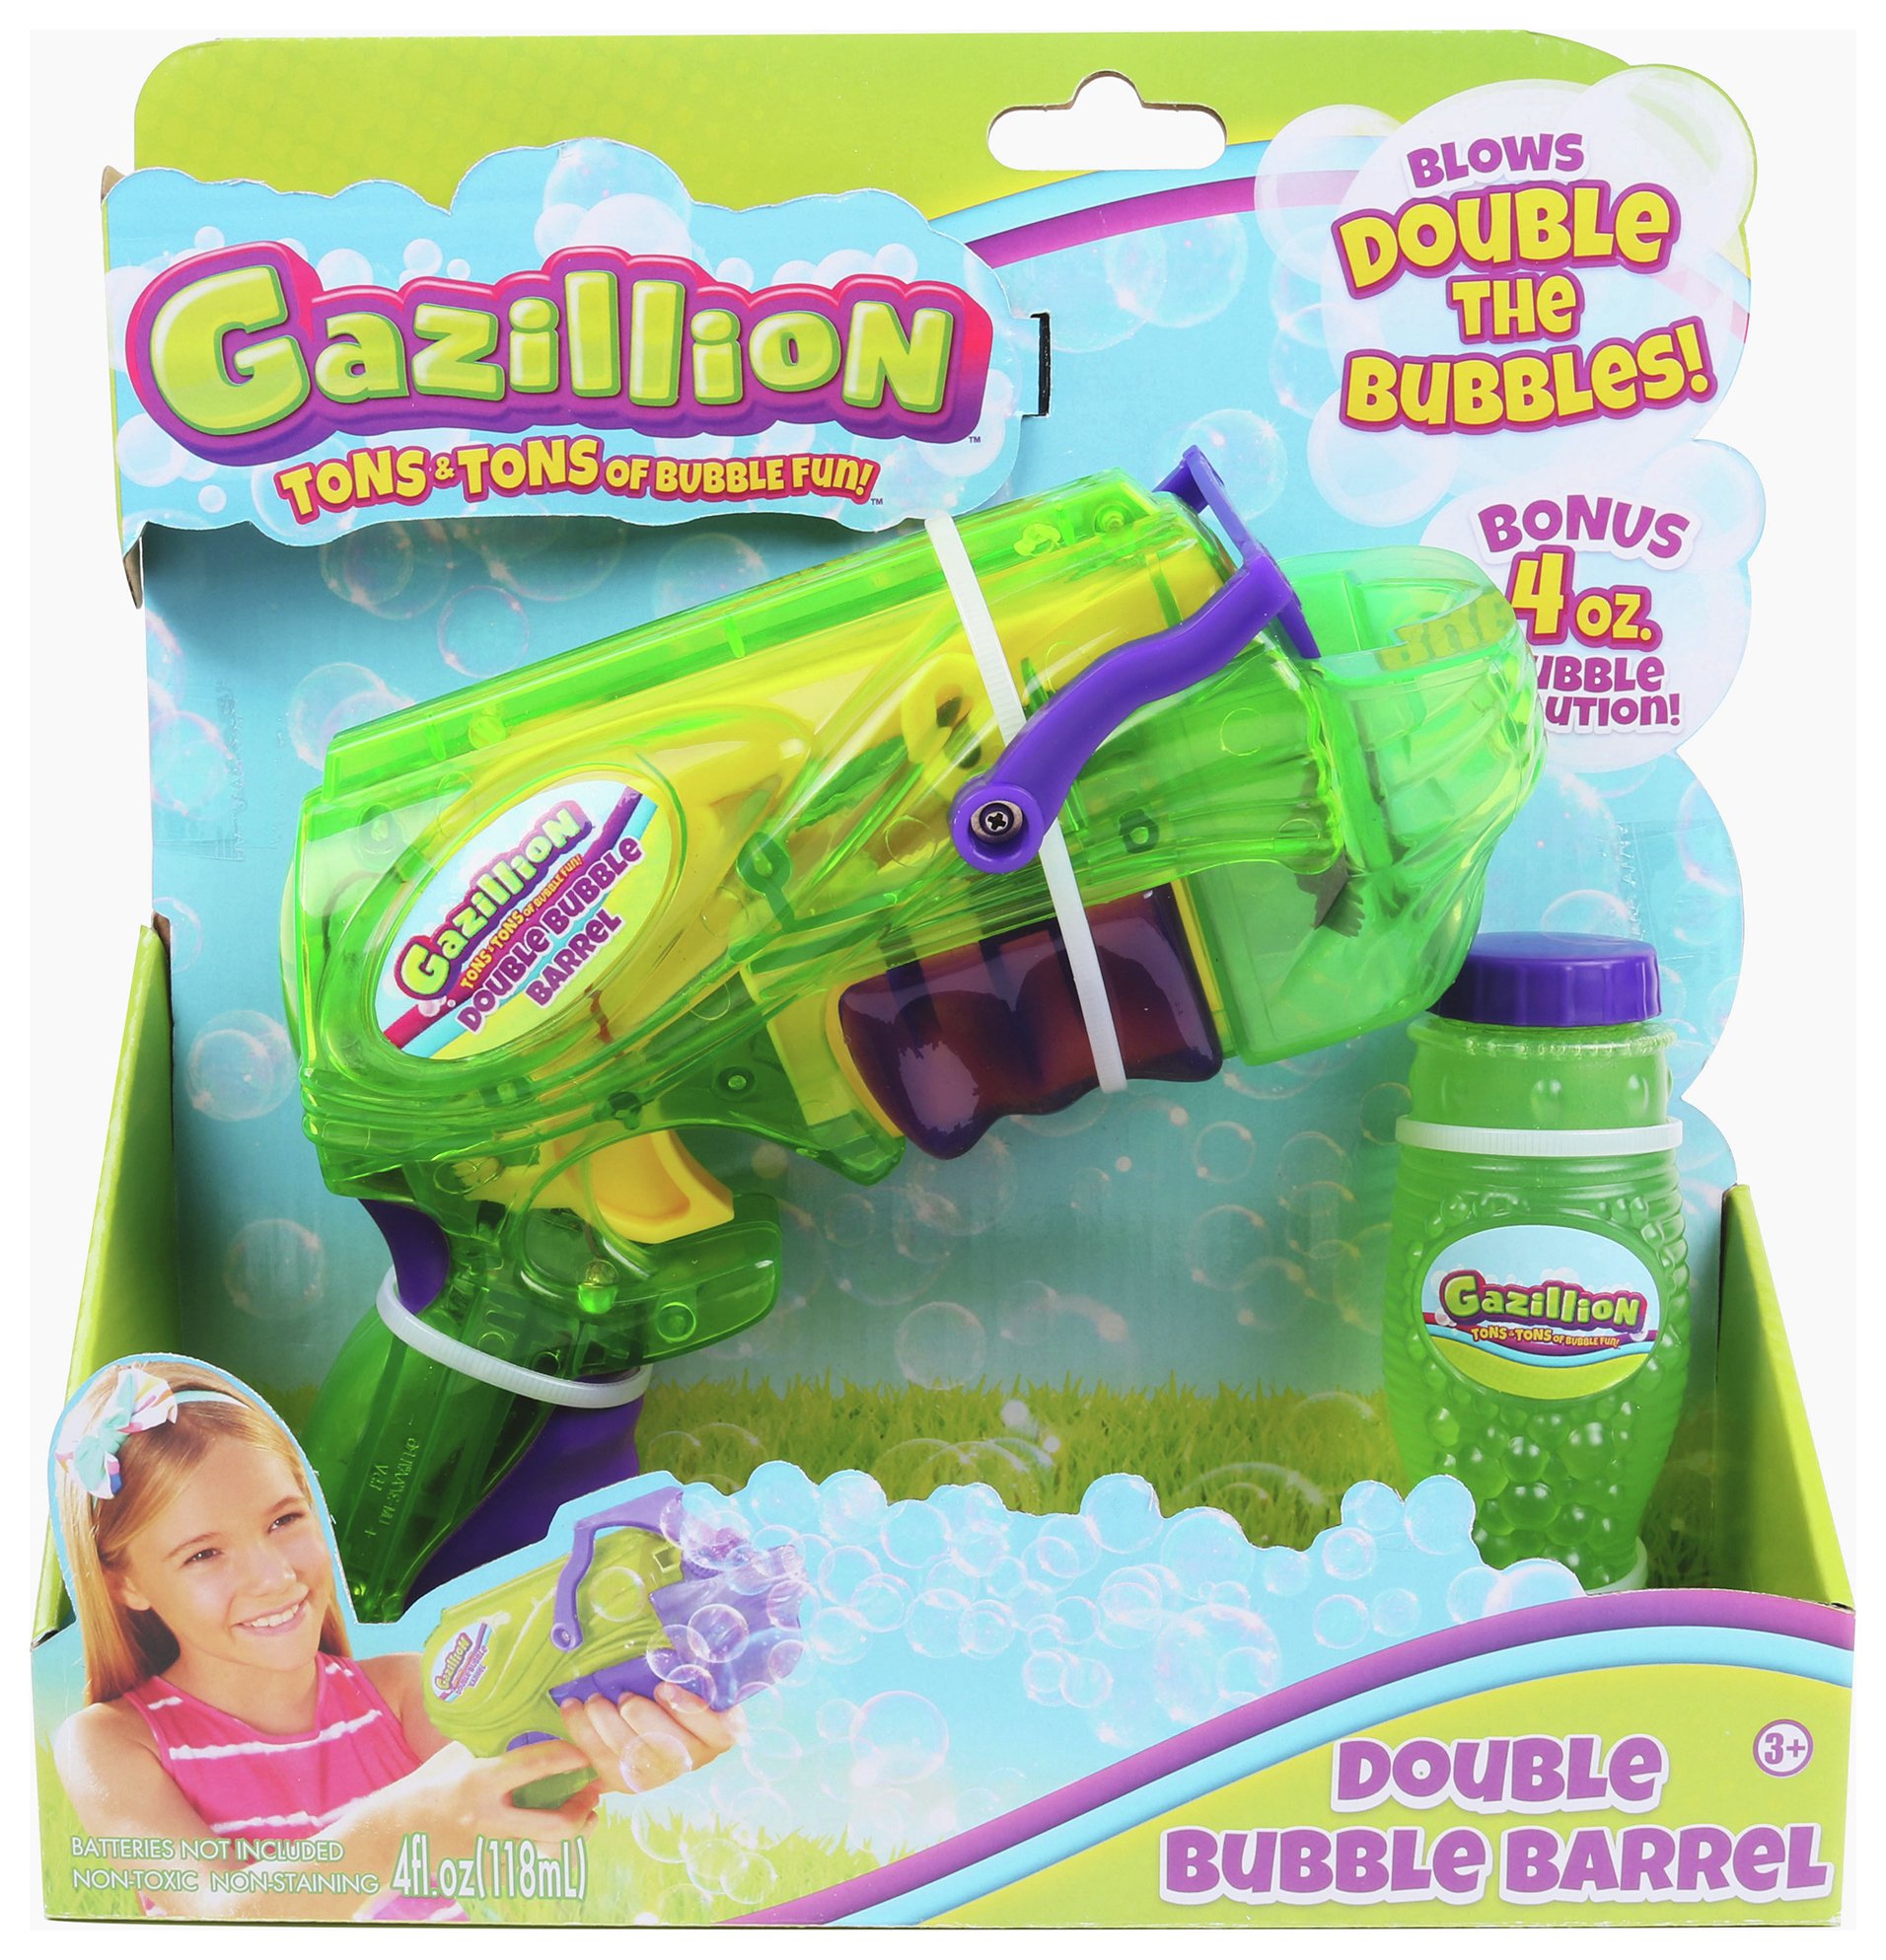 Gazillion Double Bubble Barrel Gun